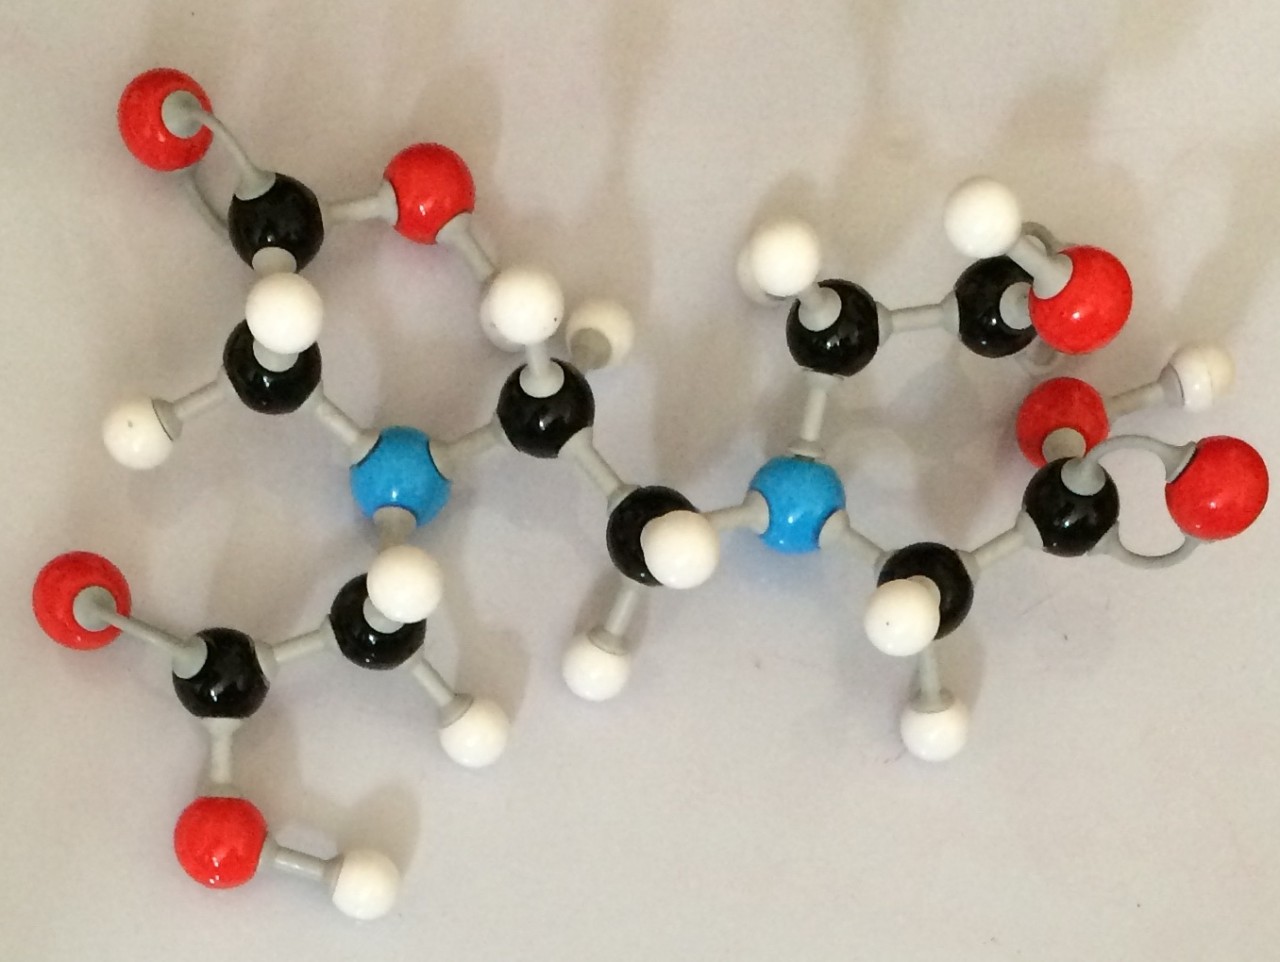 EDTA molecule